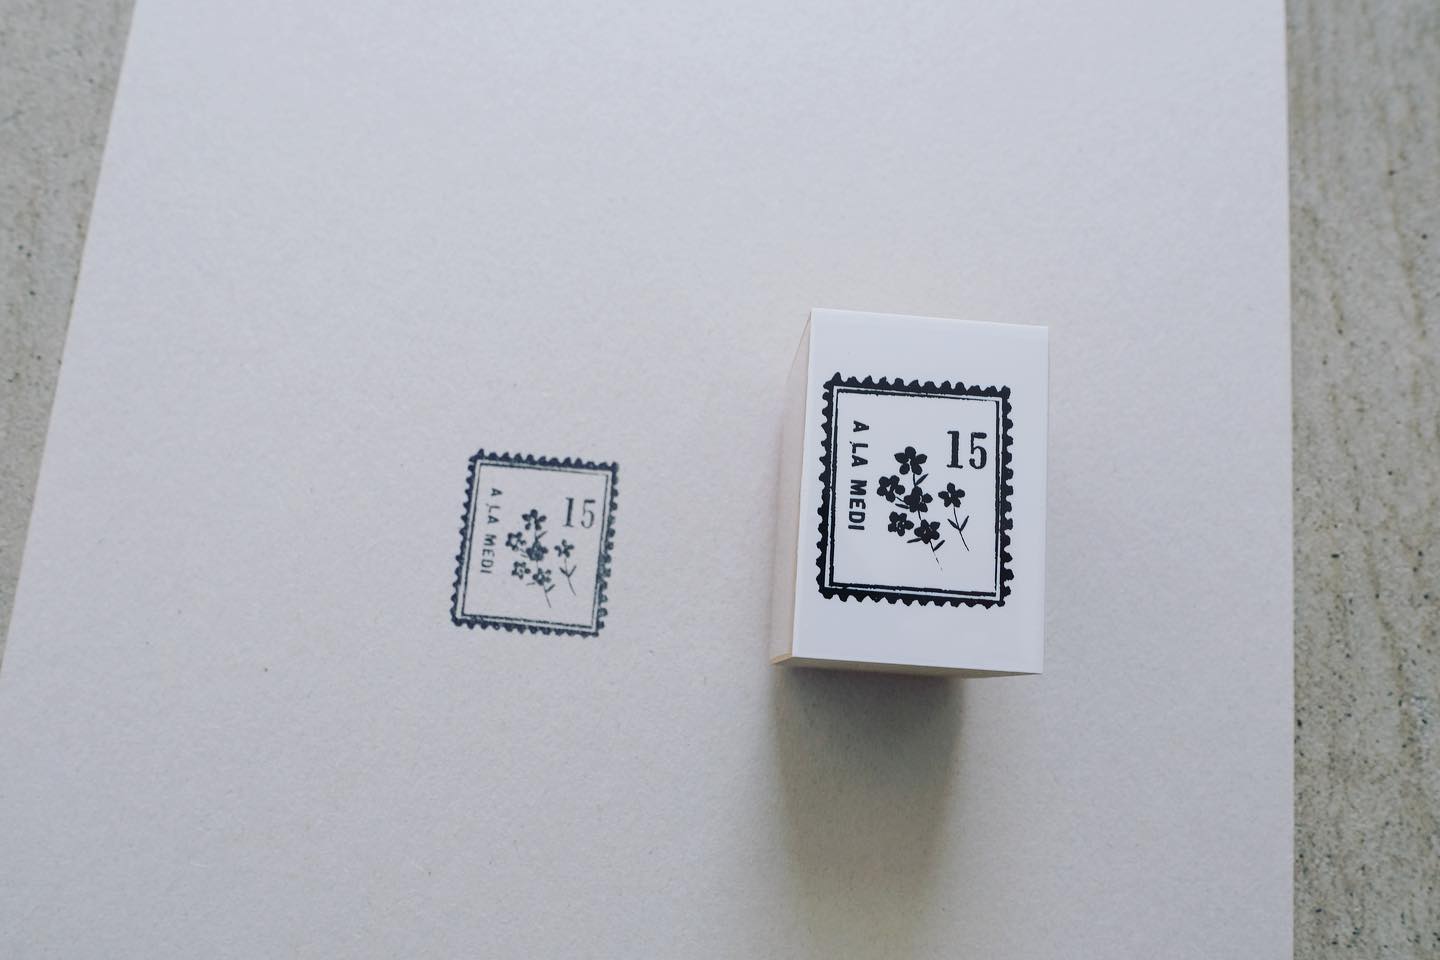 YOHAKU Rubber Stamp - Present (S-044)